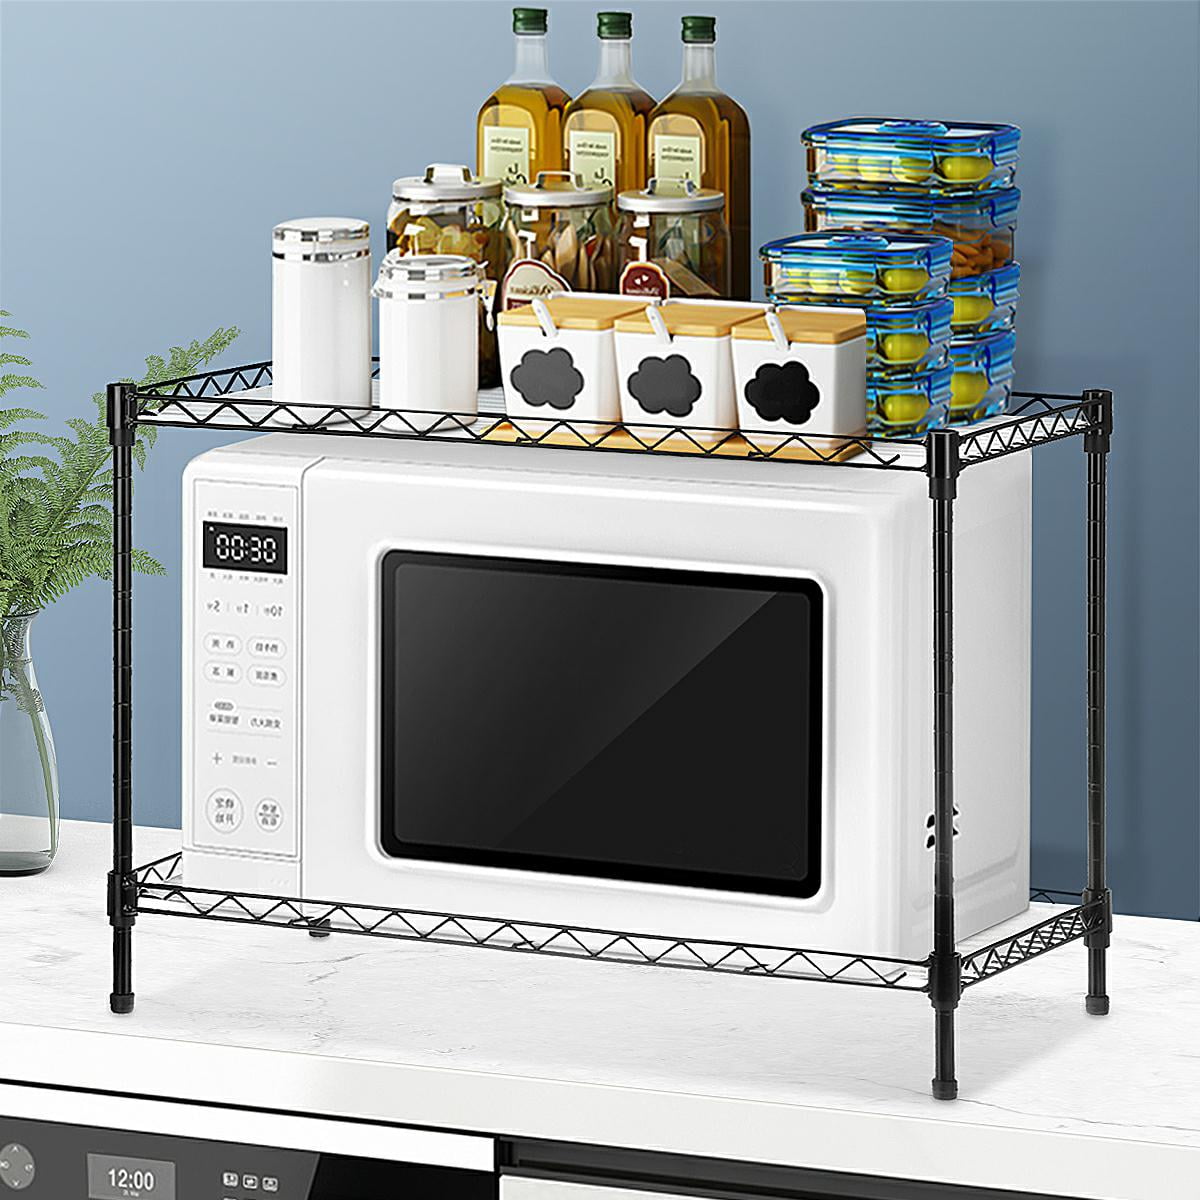 Multifunctional Kitchen Rack Microwave Oven Floor Shelf Storage Storage  Cupboard - 35.4x16.53x51.39 inch - Bed Bath & Beyond - 32063503